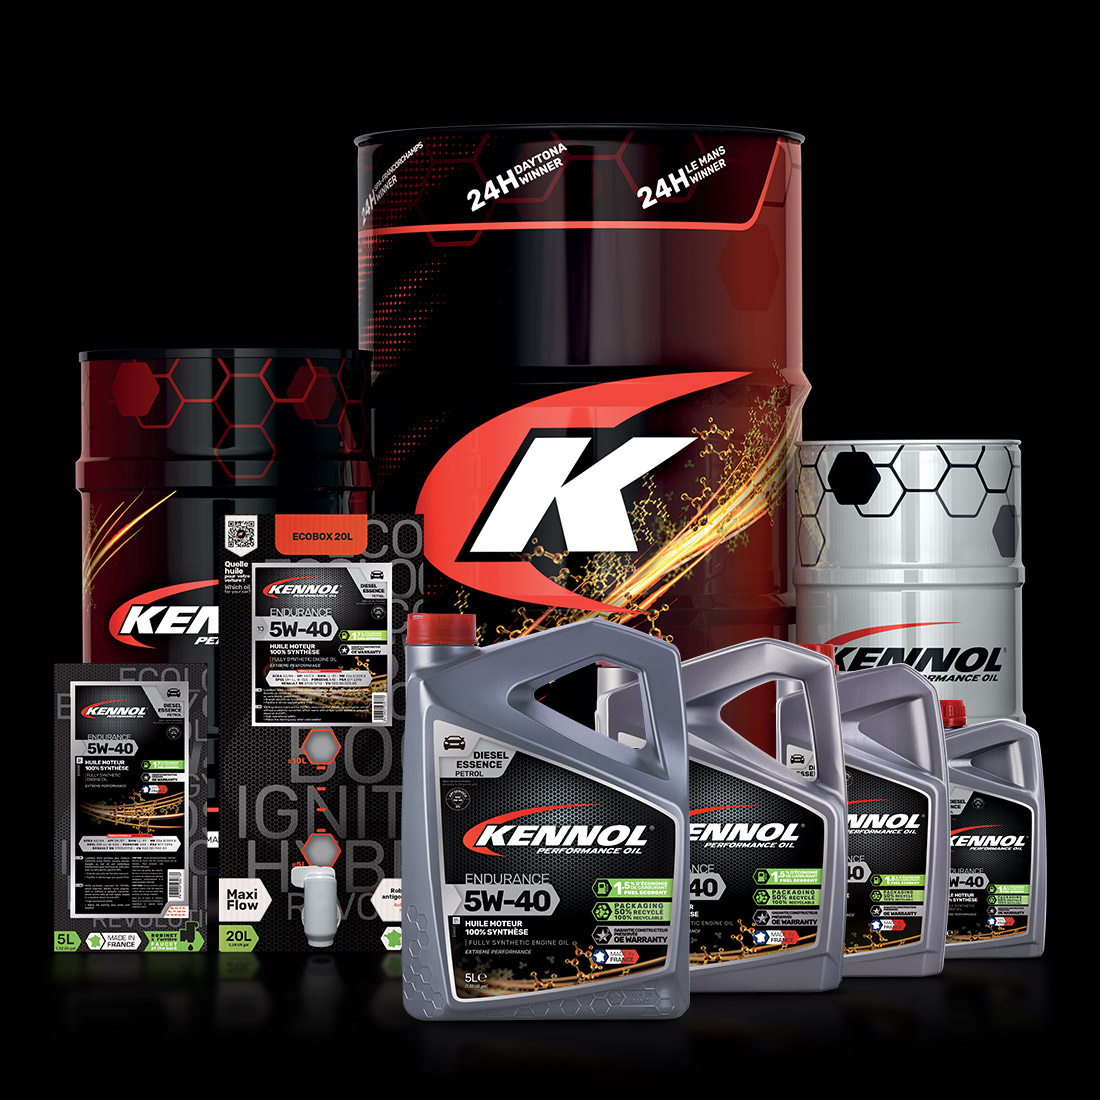 KENNOL ENDURANCE 5W40 range packshot